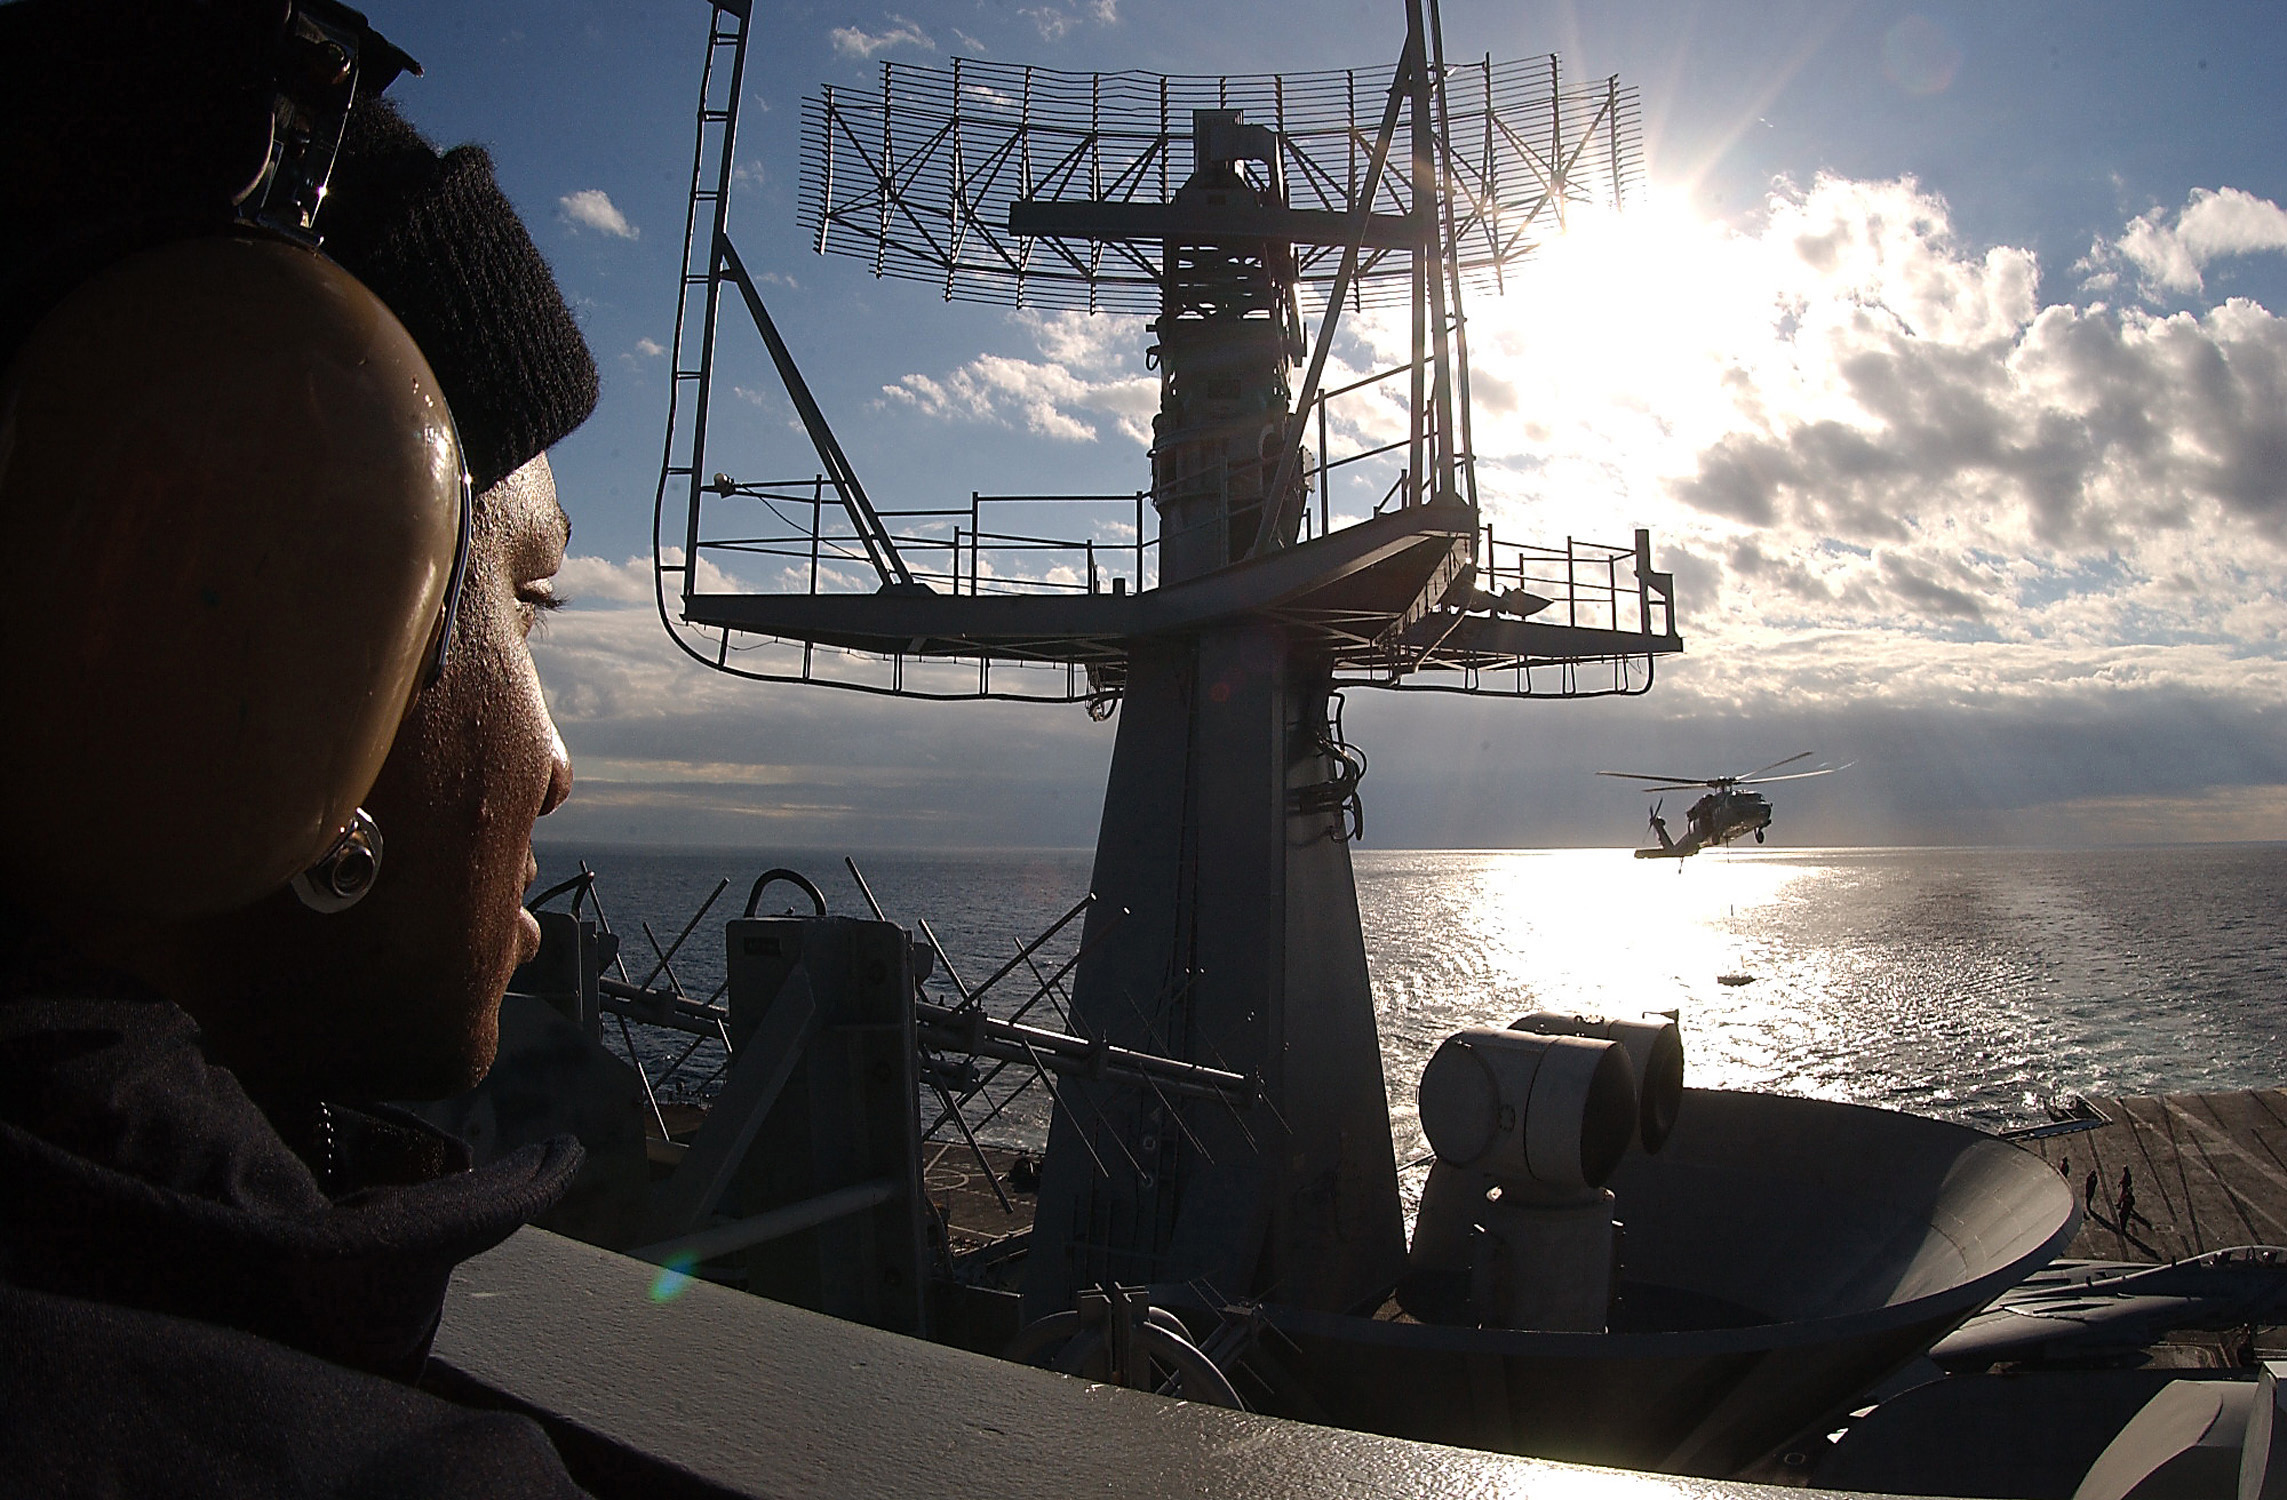 US Navy 031110-N-6278K-002 Seaman Okpara Kelly stands the aft lookout watch on the signal bridge aboard USS George Washington (CVN 73)